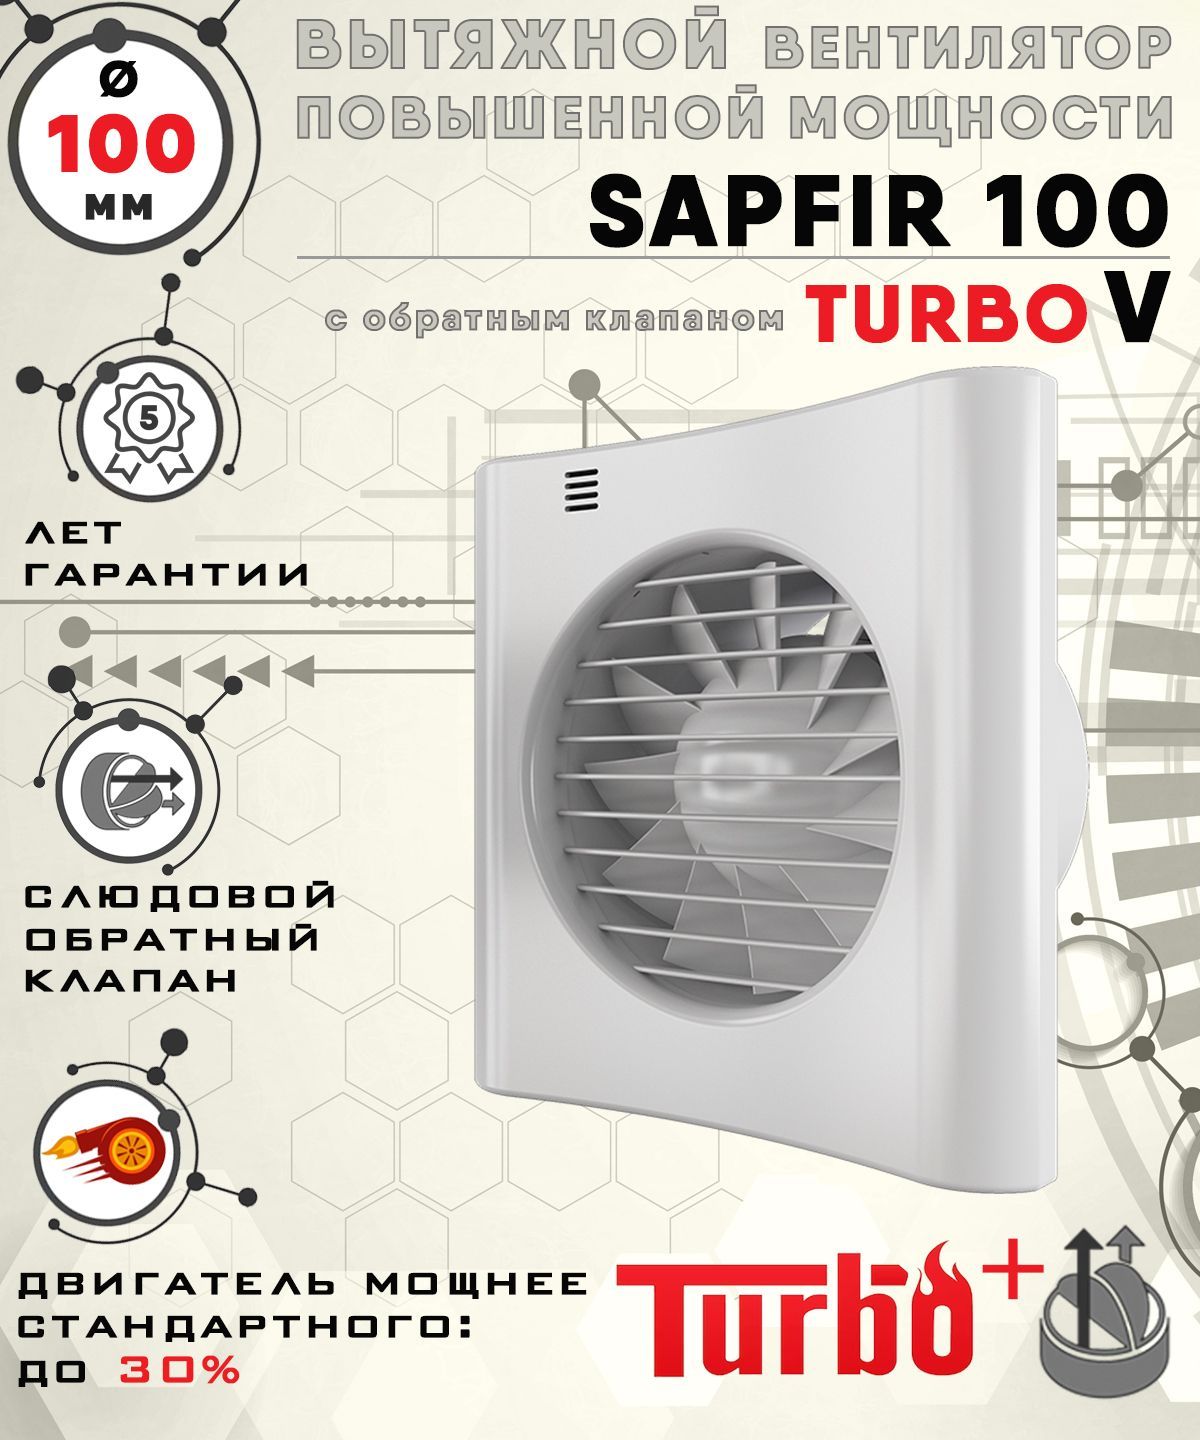 фото Sapfir 100 turbo v вентилятор вытяжной диаметр 100 мм zernberg